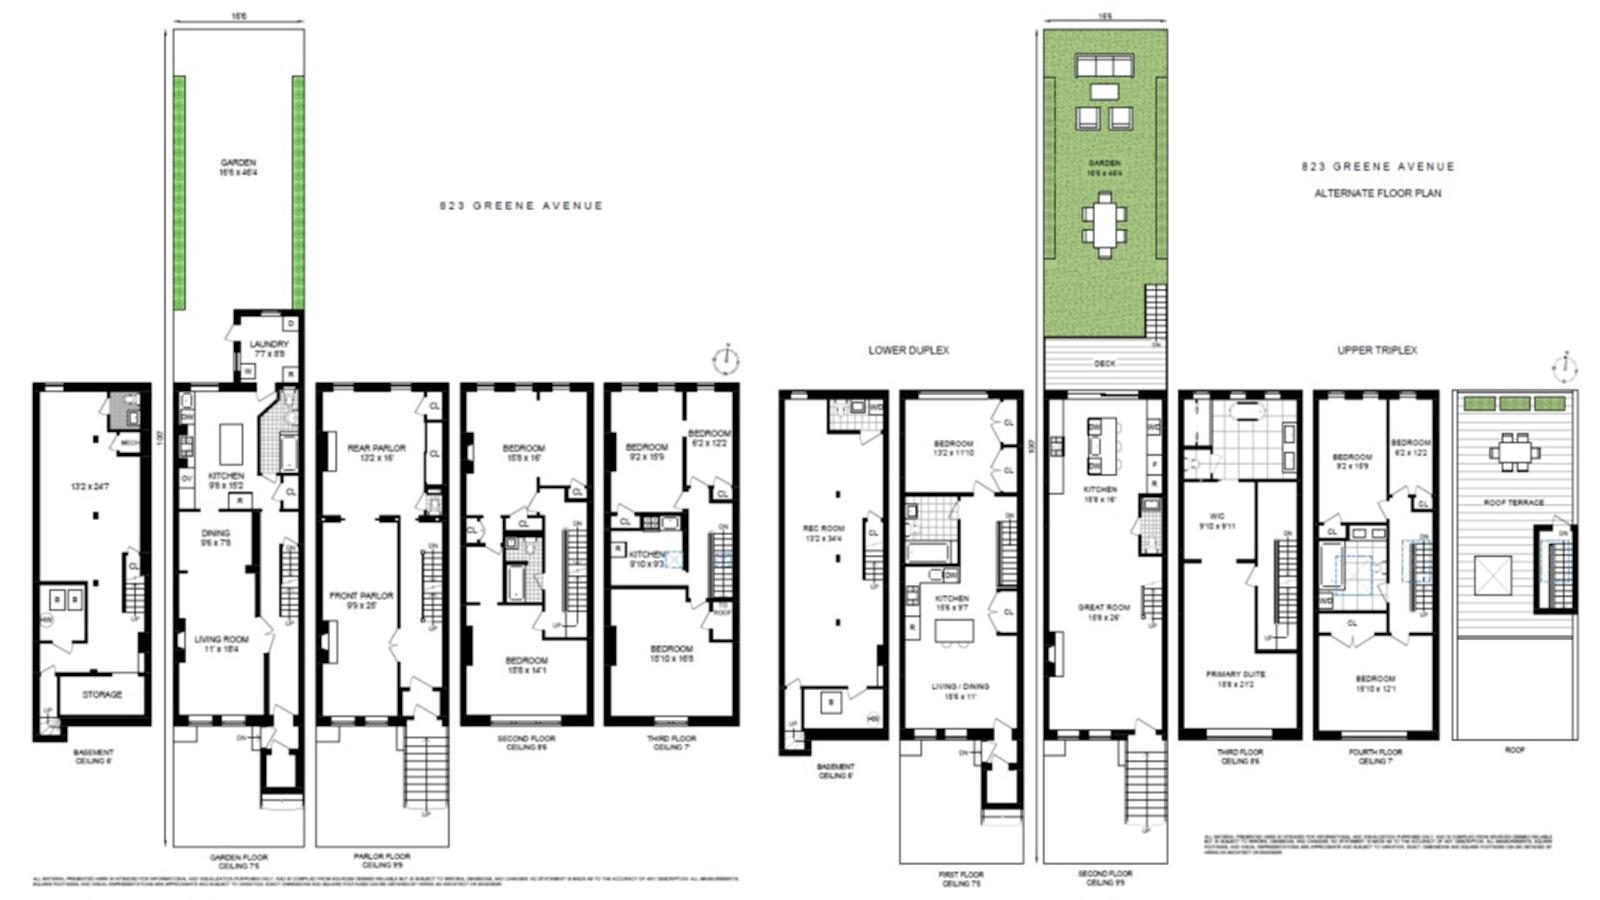 Floorplan for 823 Greene Avenue